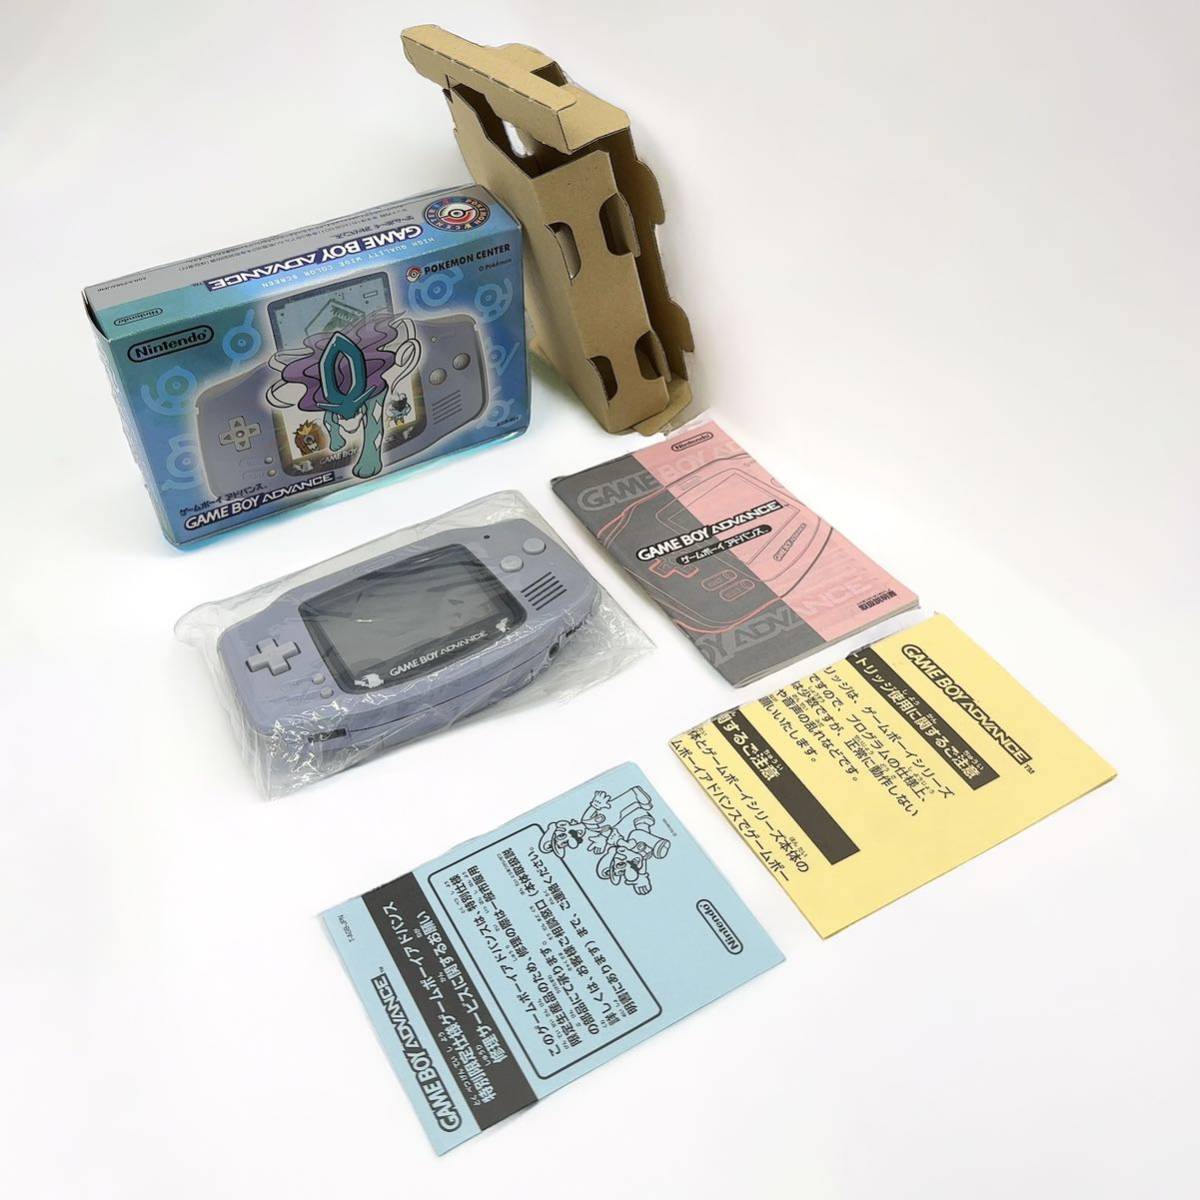  almost new goods Nintendo Game Boy Advance body Pokemon center limitation acid kn blue Nintendo GBA GAMEBOY ADVANCE Pokmon Center